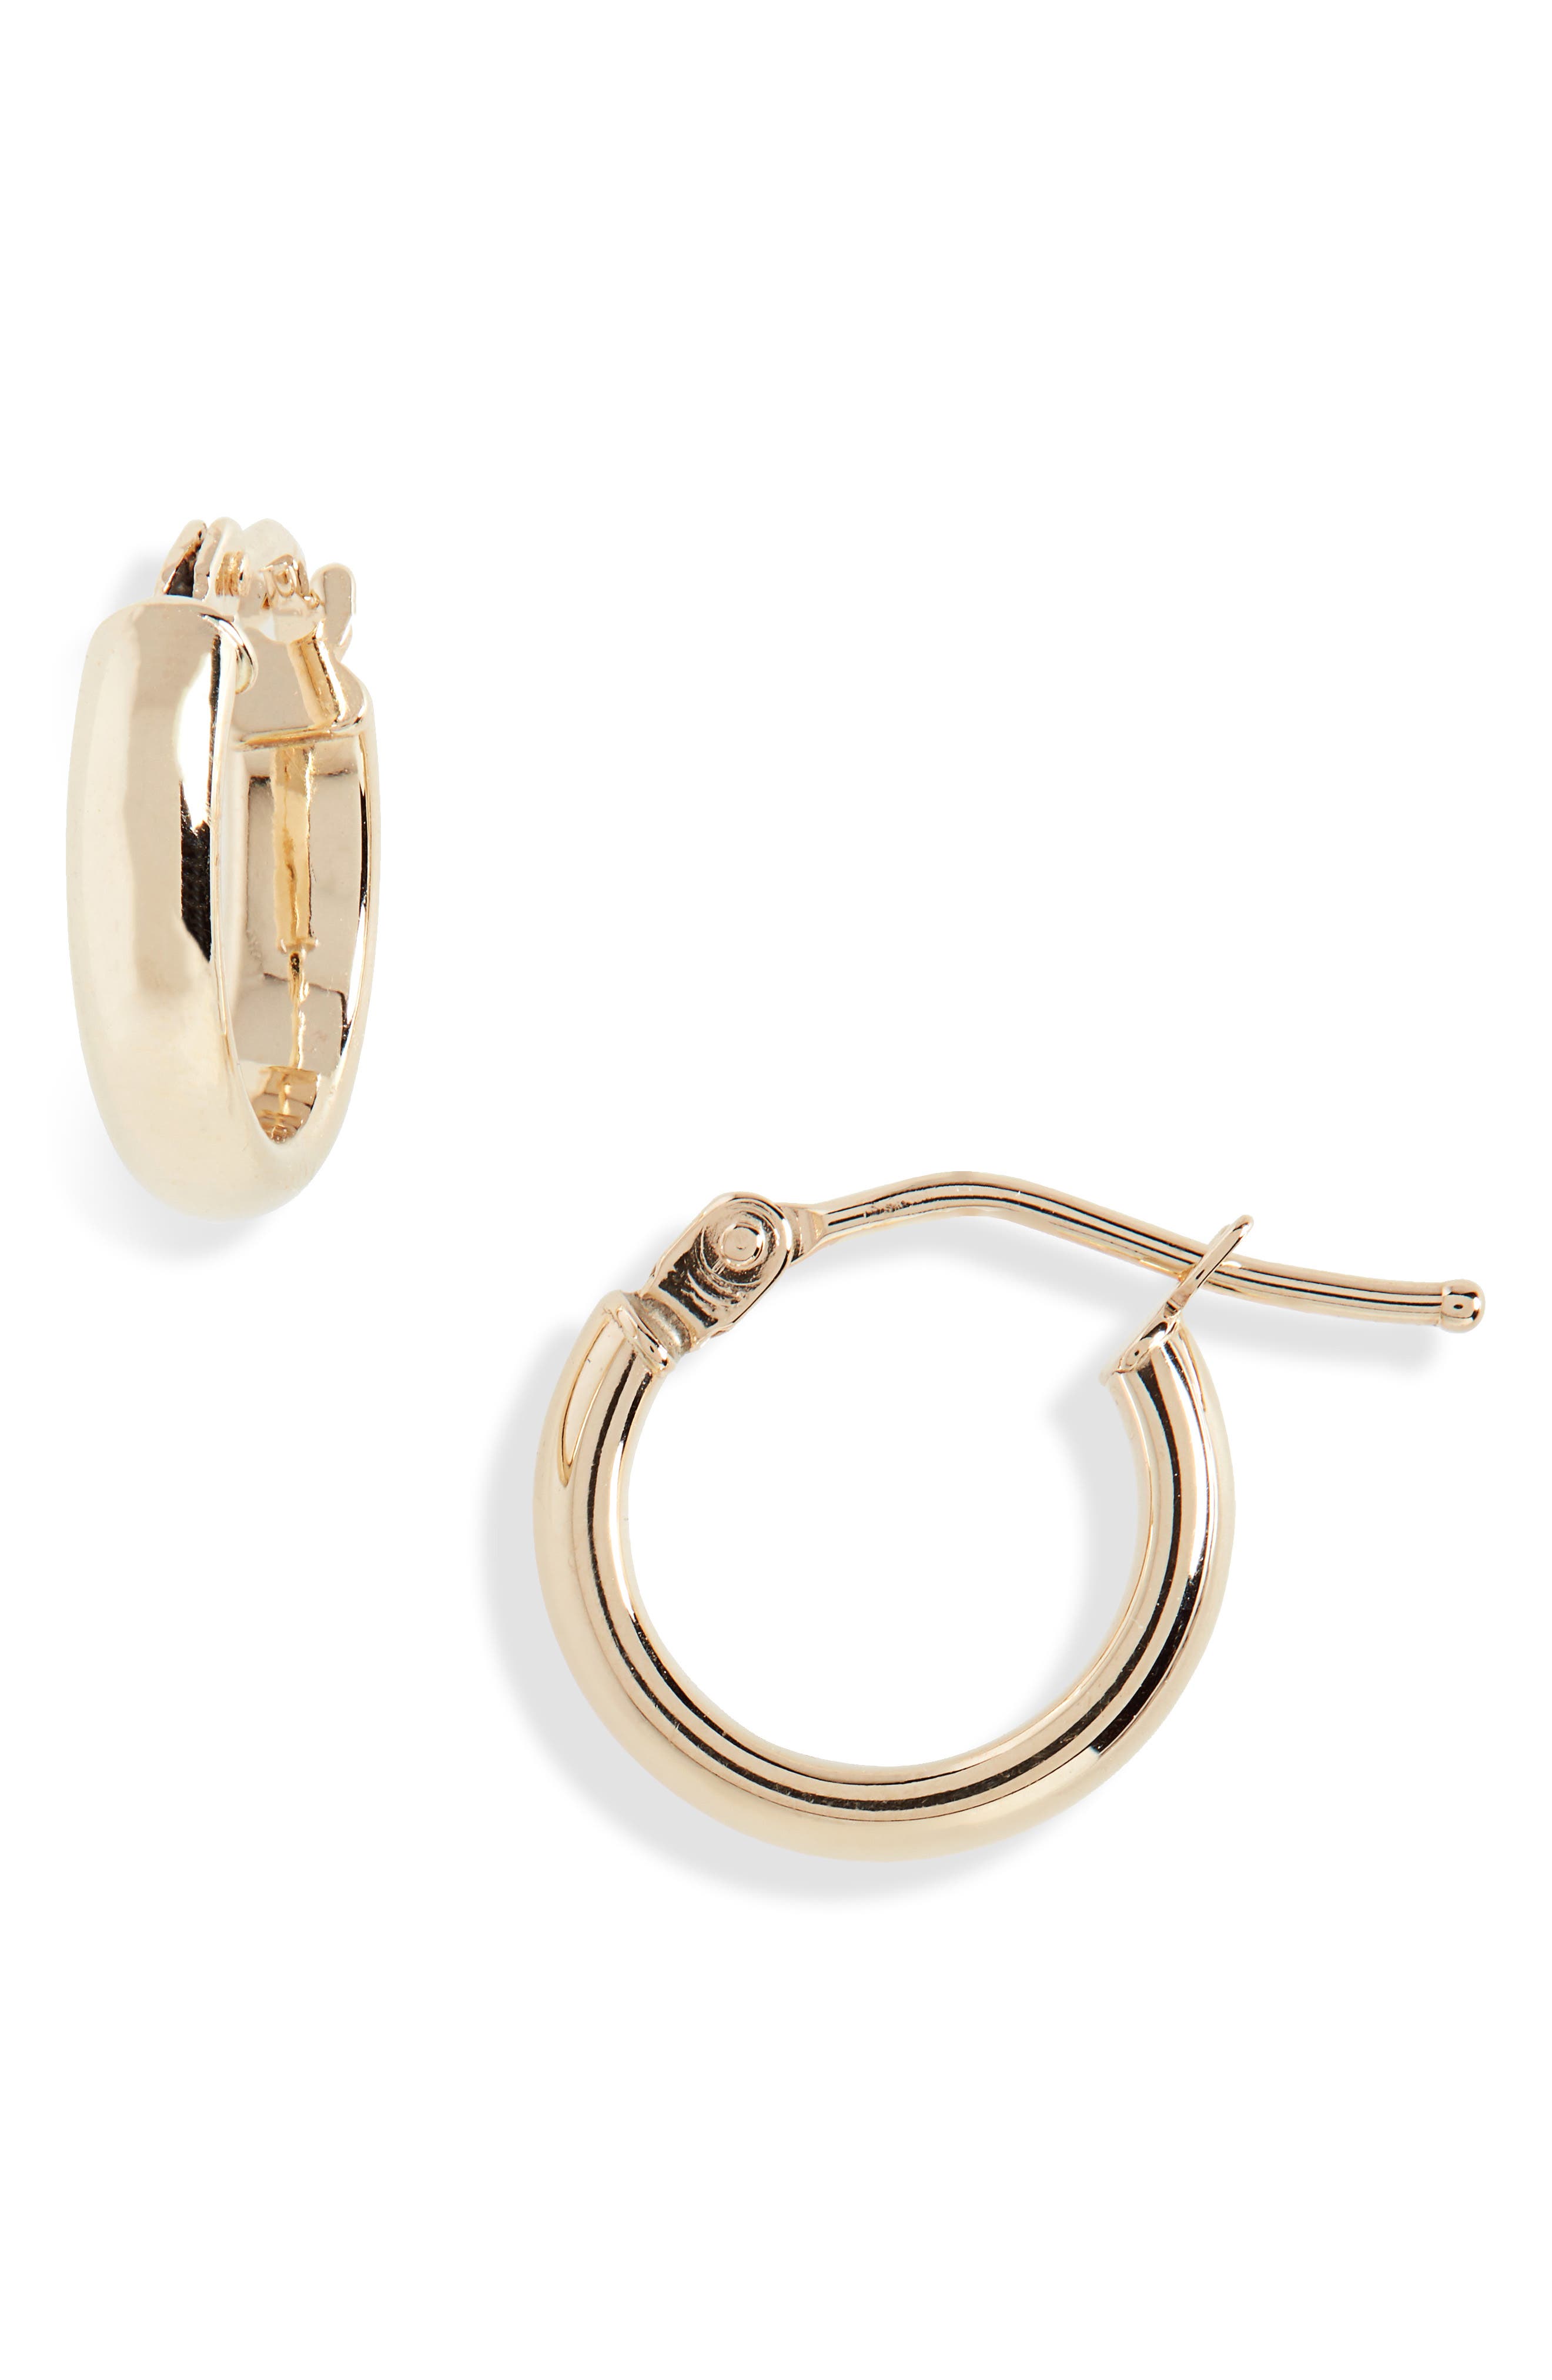 Solid 14k Yellow Gold CZ Circle Dangle Earrings Huggies w/ Chain Hanging Fashion Style Polished 40 mm 